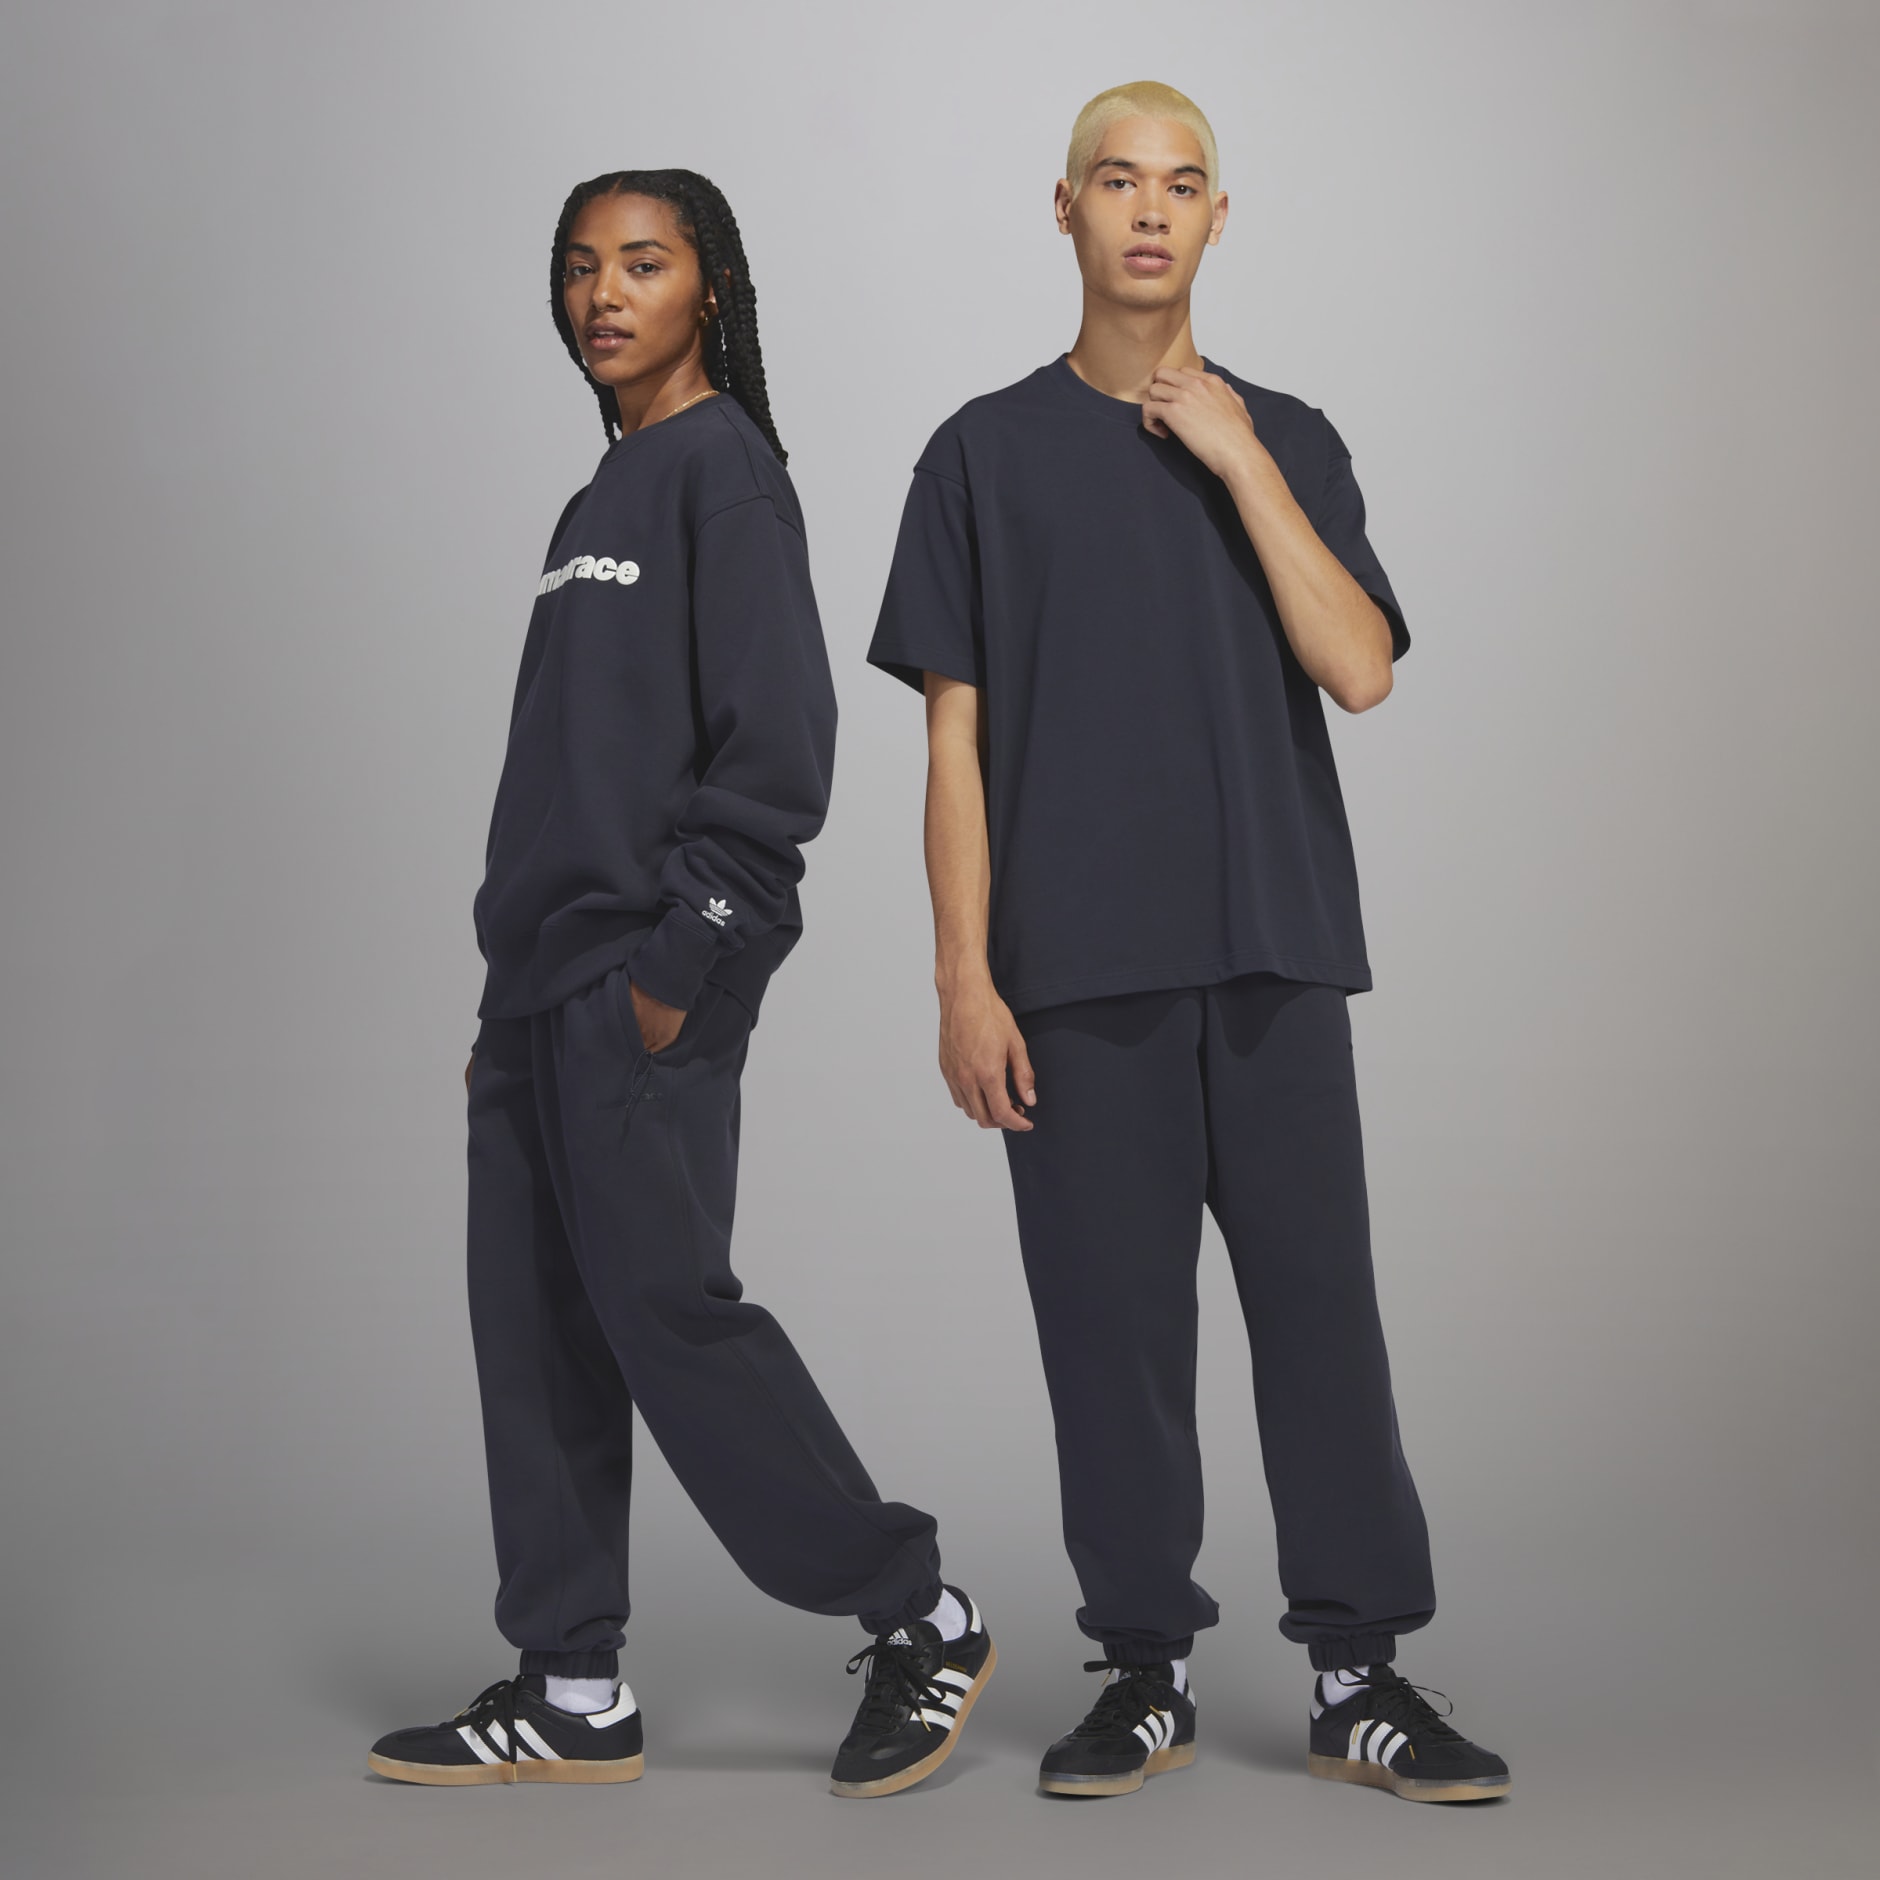 adidas Pharrell Williams Shell Pants (Gender Neutral) - Grey